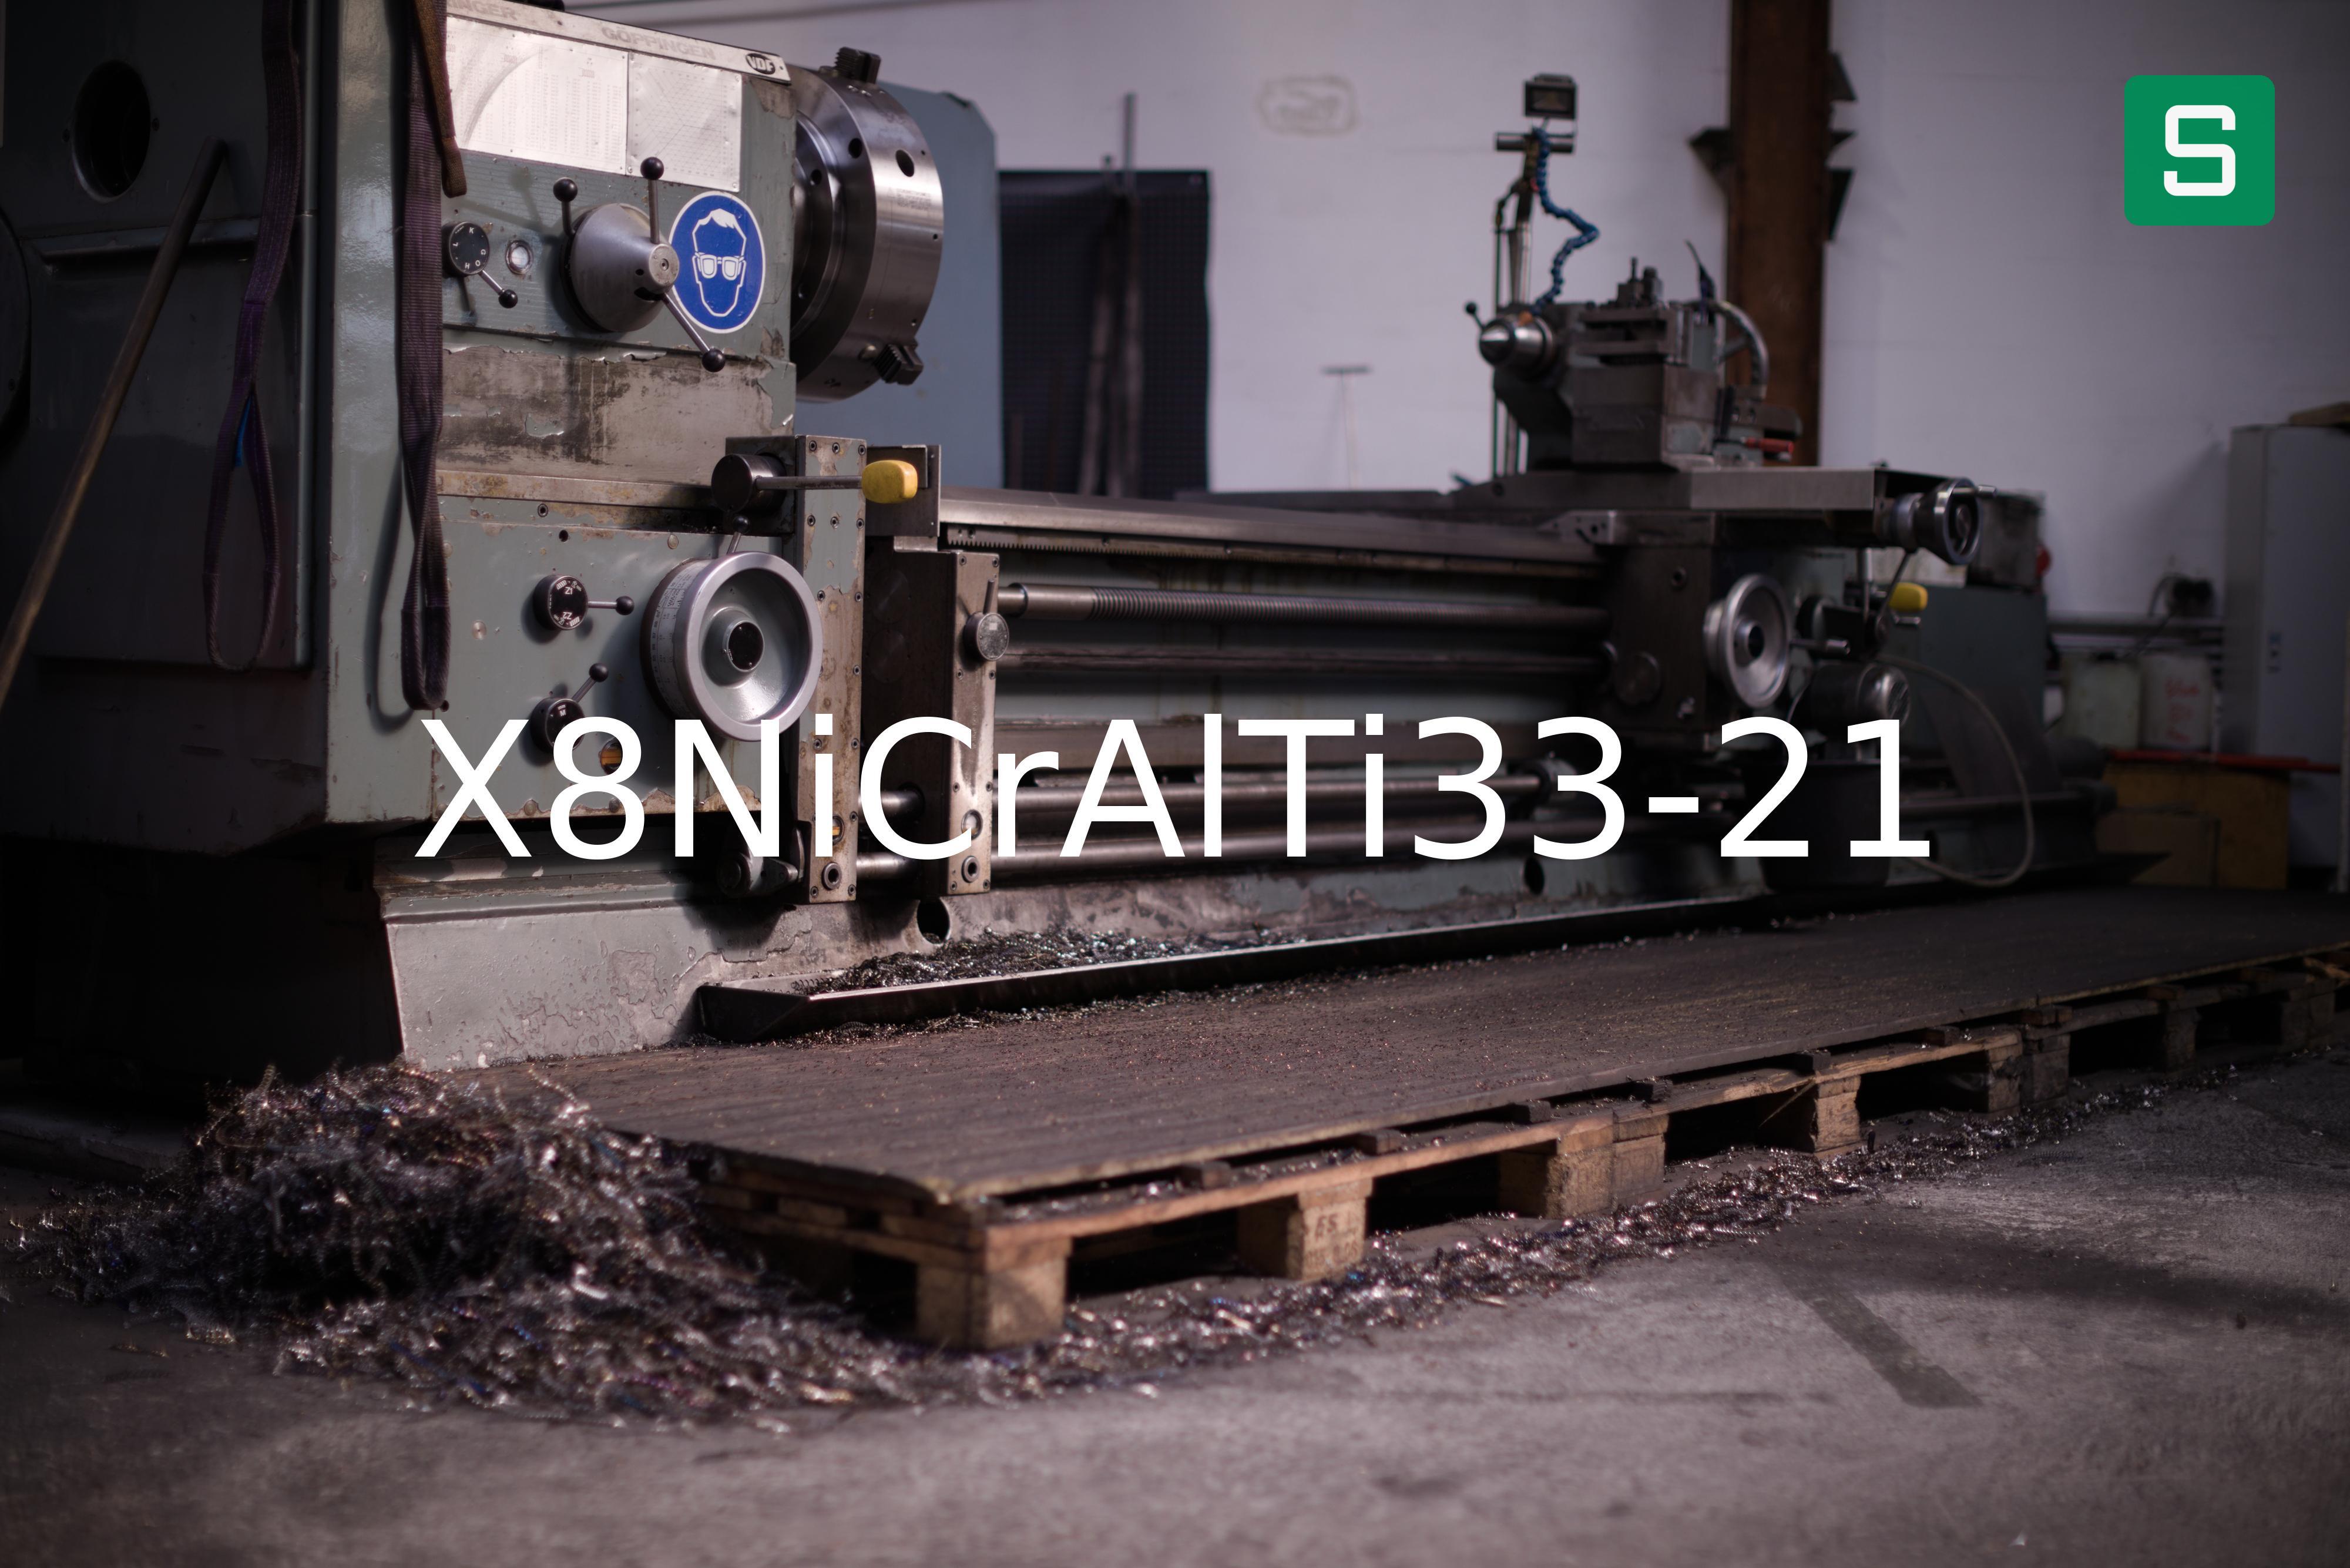 Material de Acero: X8NiCrAlTi33-21